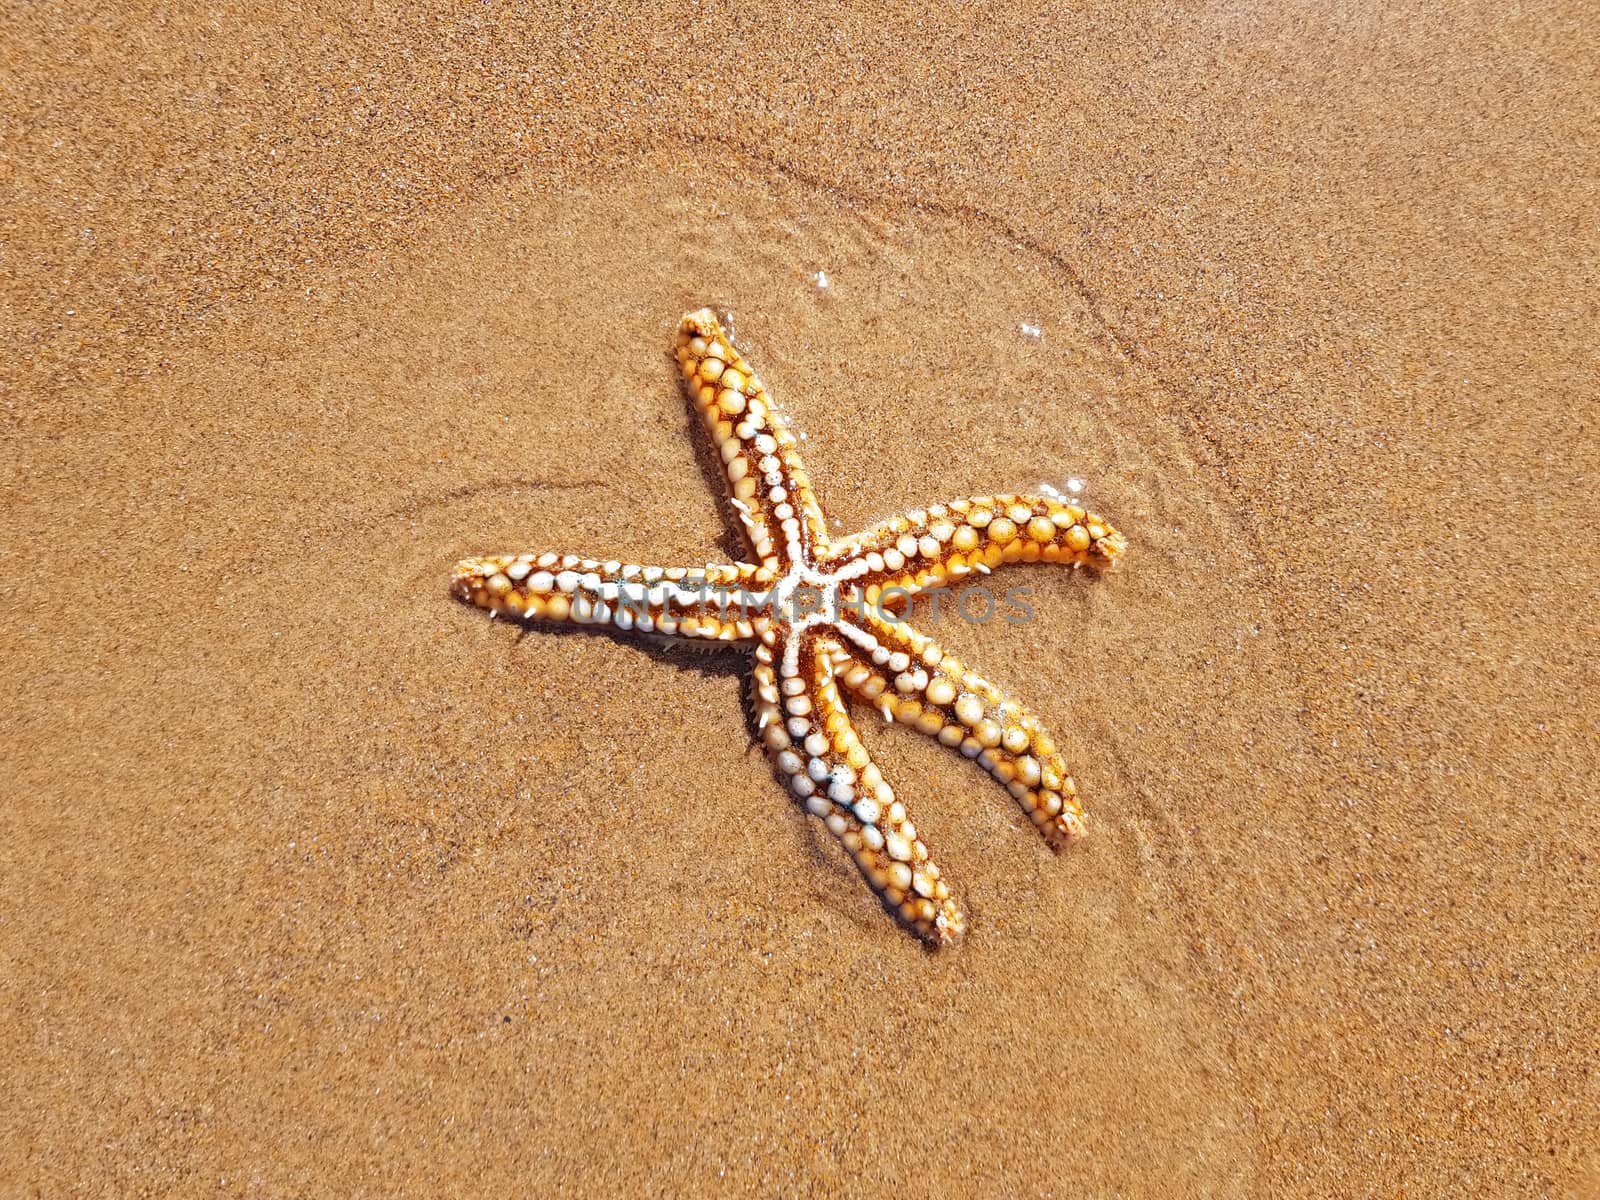 Starfish on the beach at the atlantic ocean